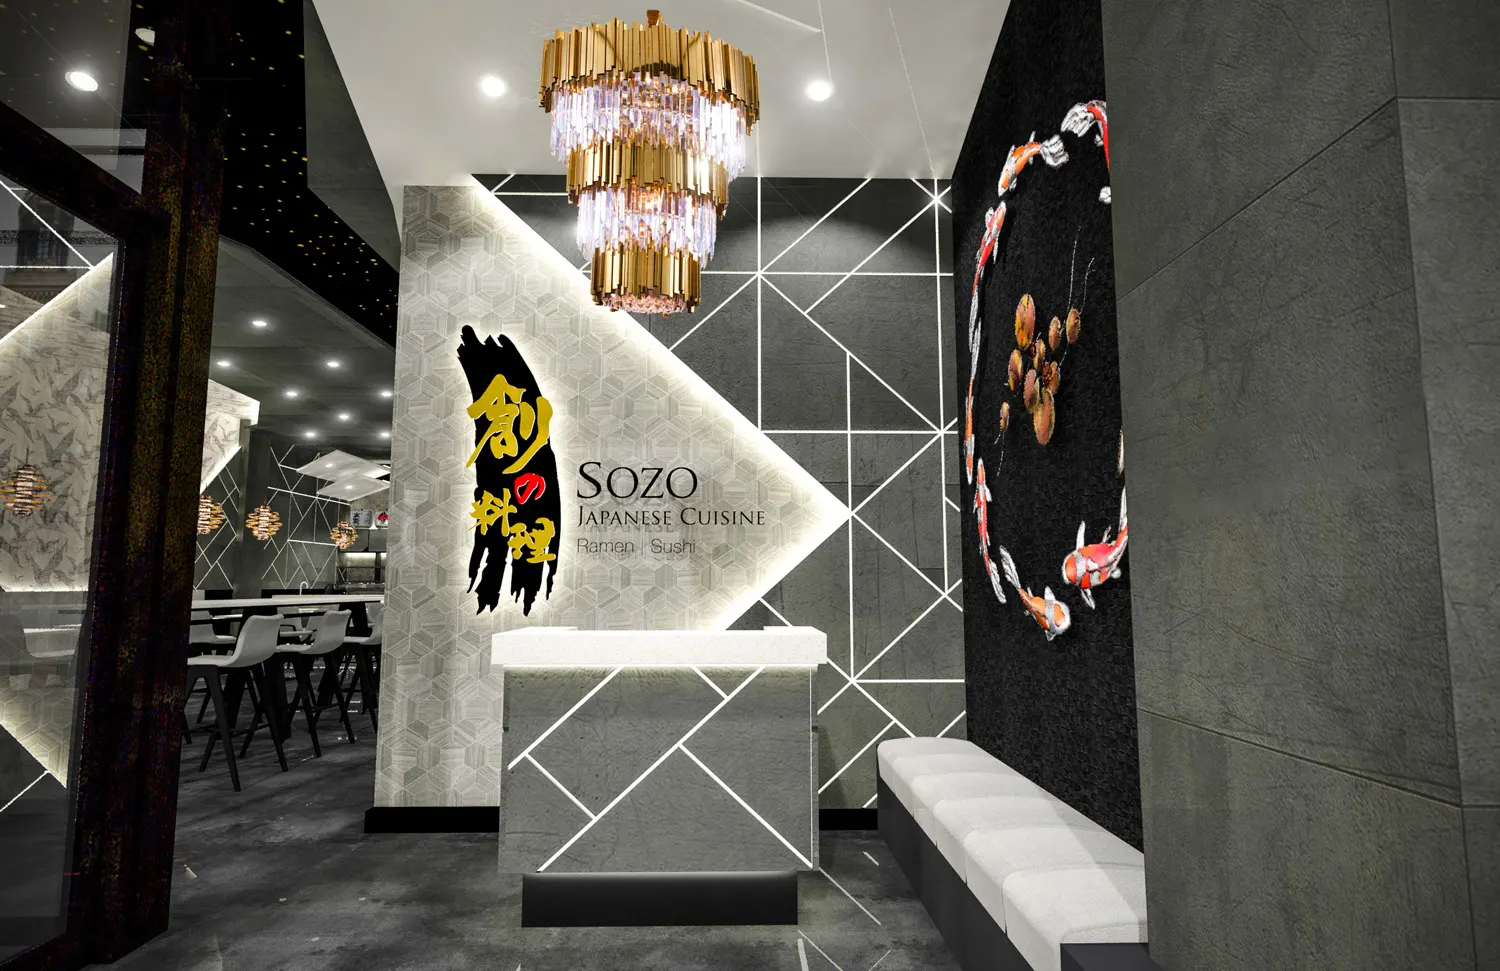 Interior design project for Sozo 創の料理​. Designed 3D rendering